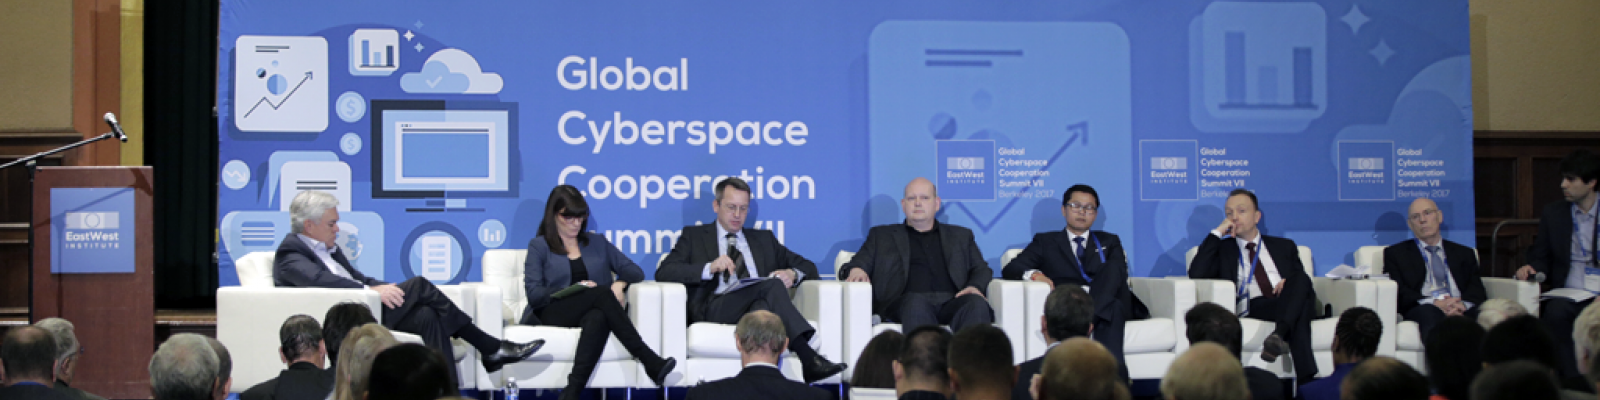 Global Cyberspace Cooperation Summit VII - Day II